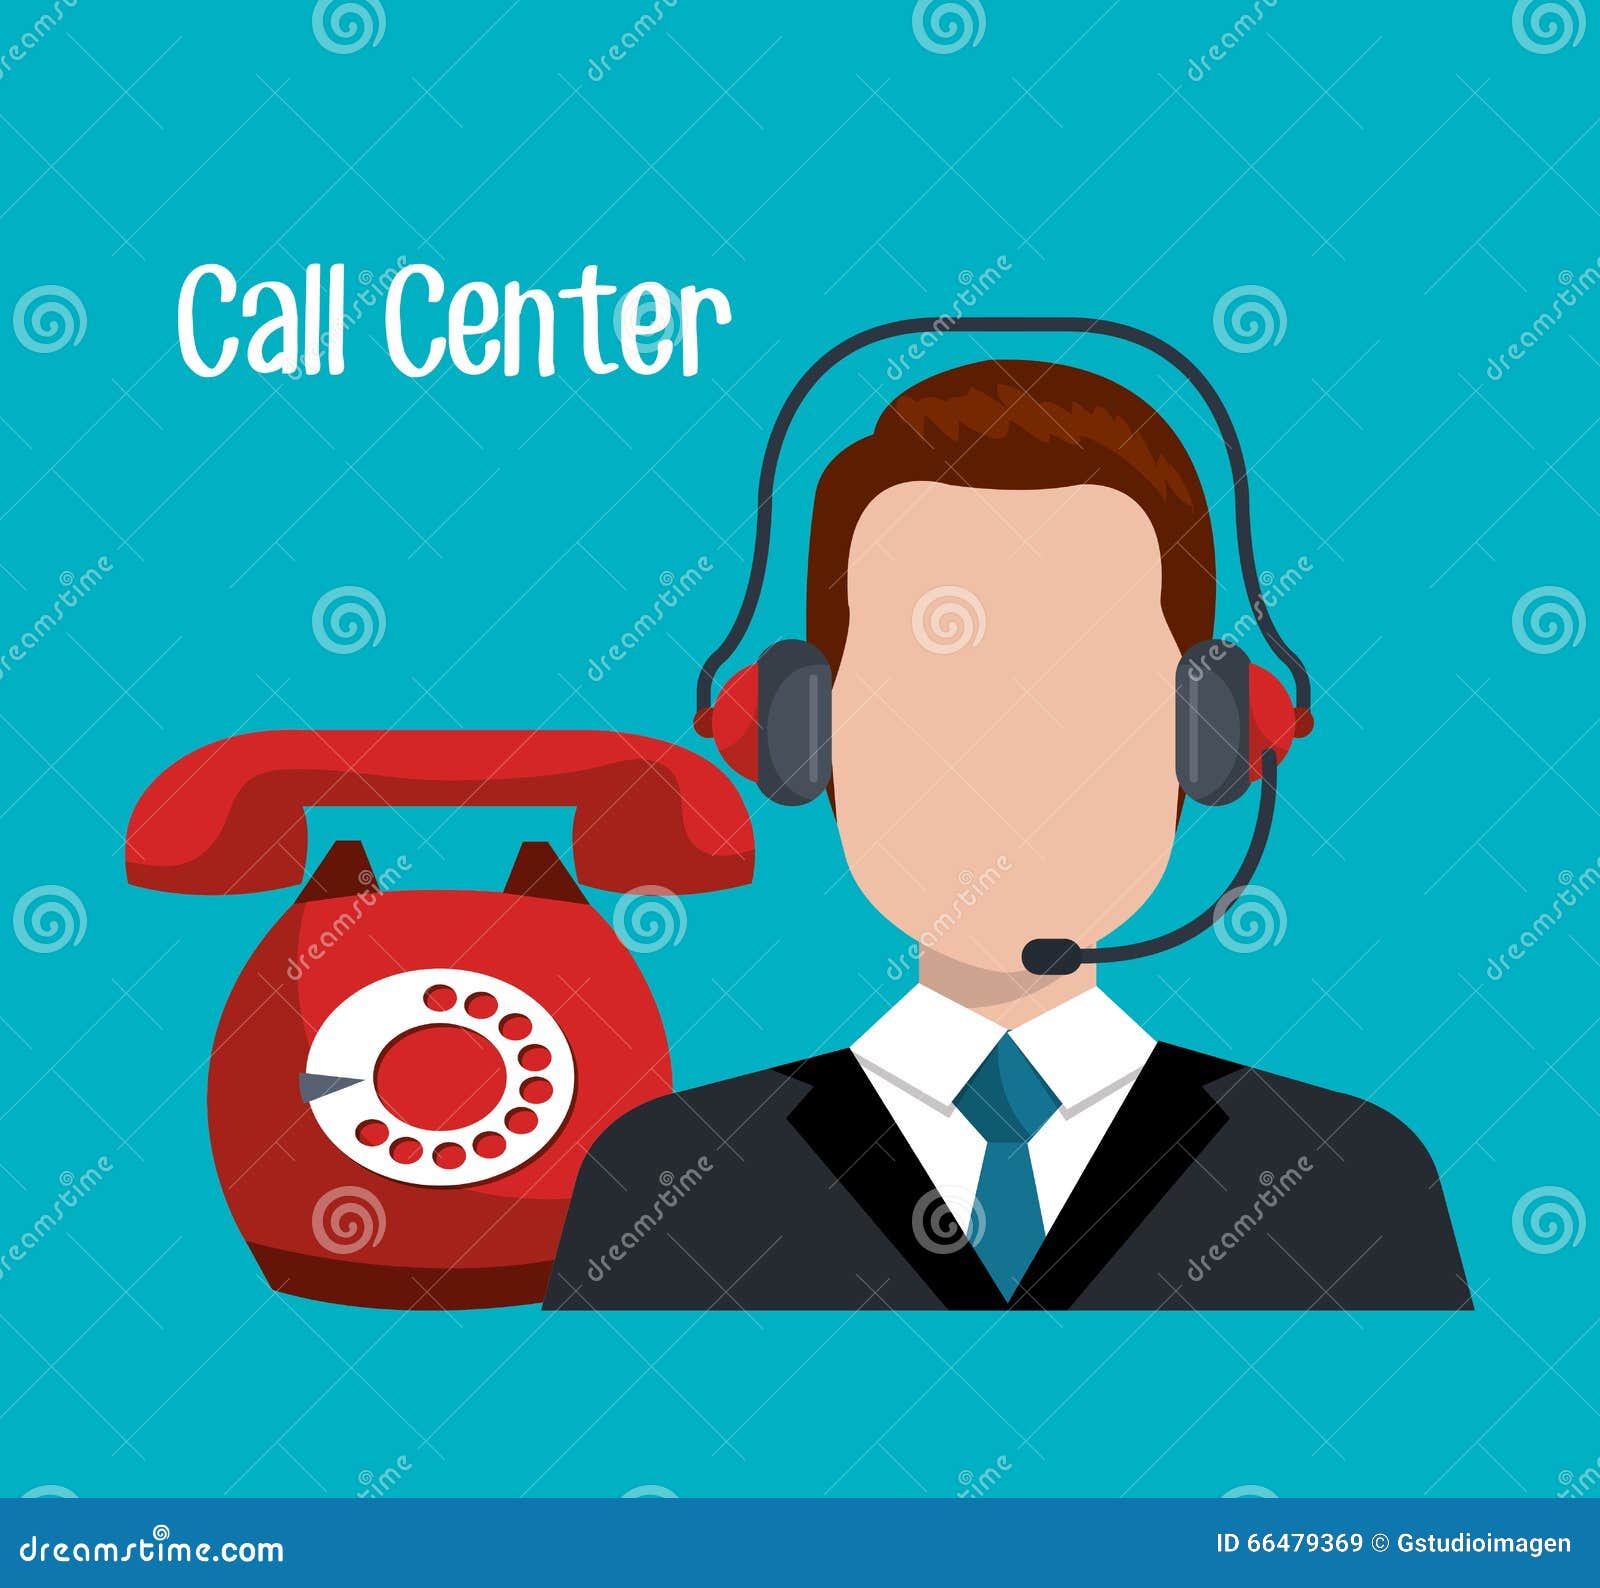 Call center service design stock illustration ...